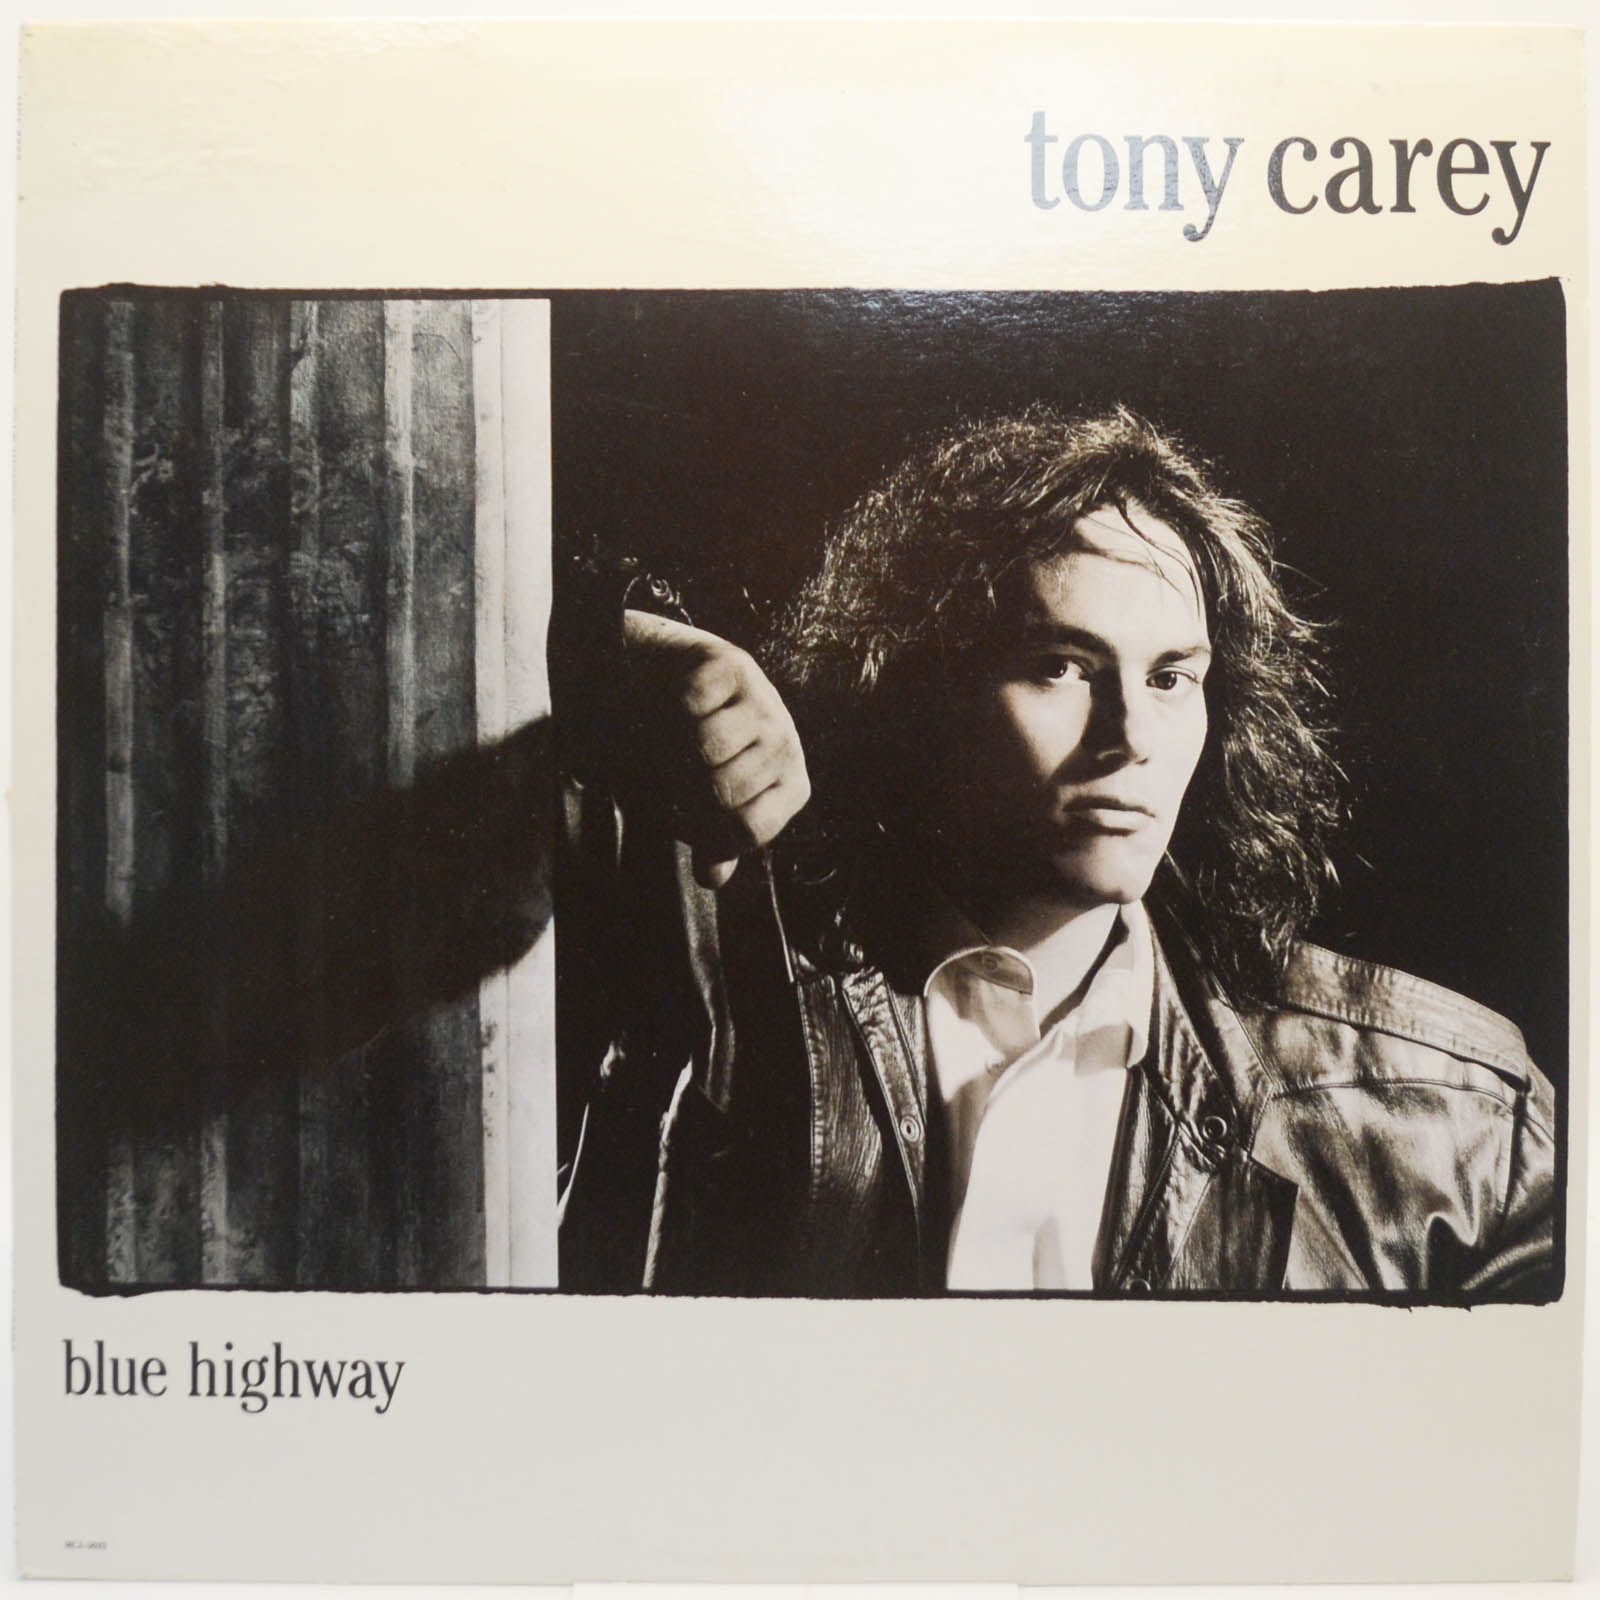 Tony Carey — Blue Highway, 1985